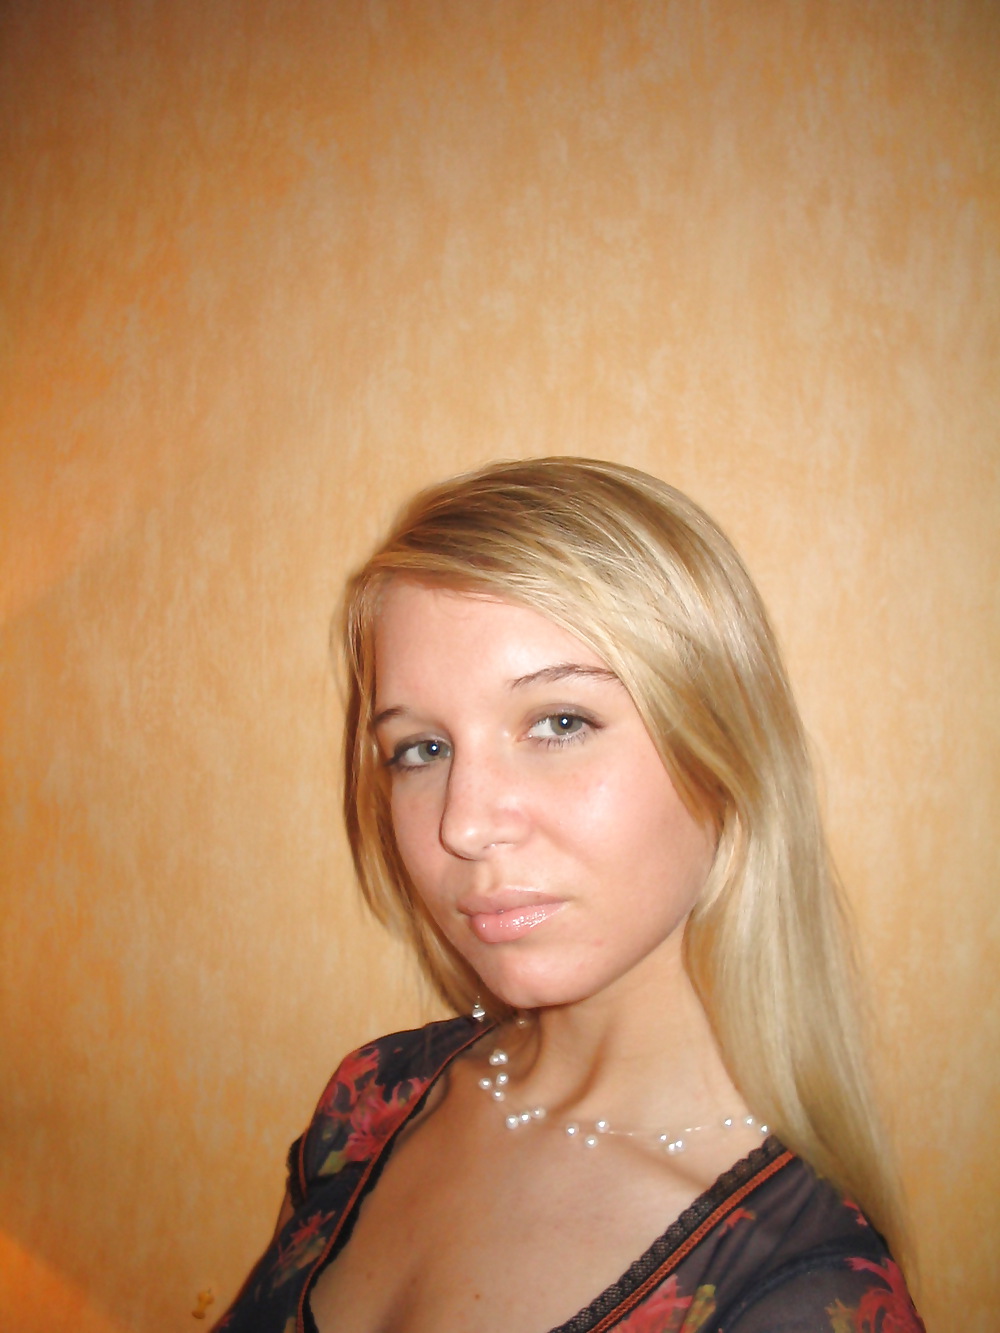 Hot ex ragazza russa teenager
 #7485004